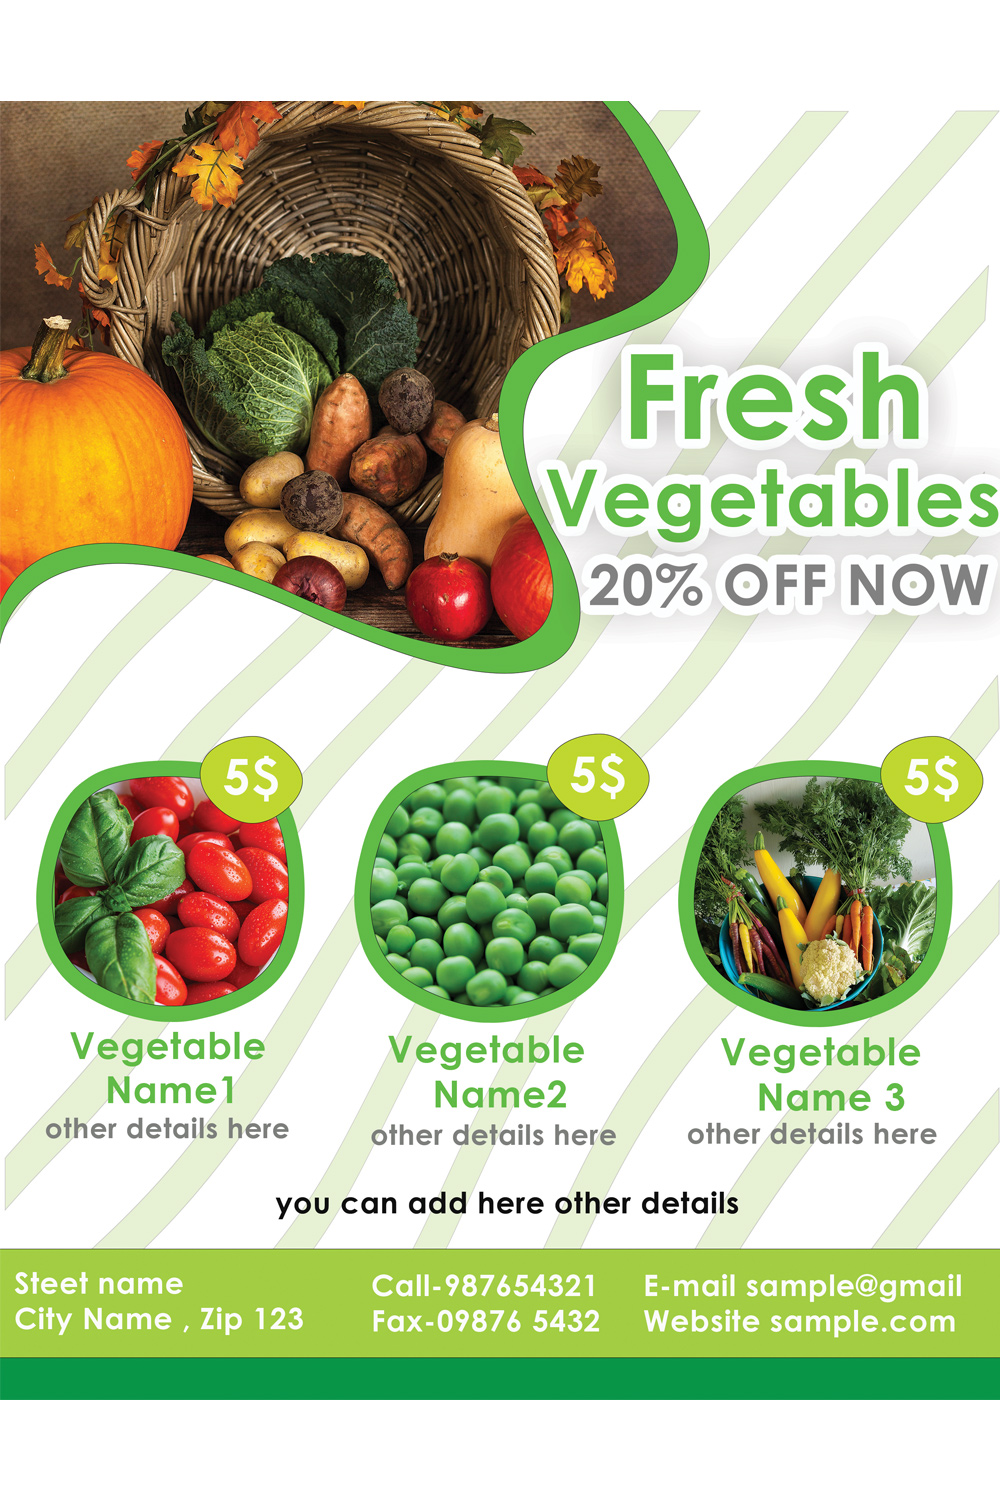 Vegetable Shop pinterest preview image.